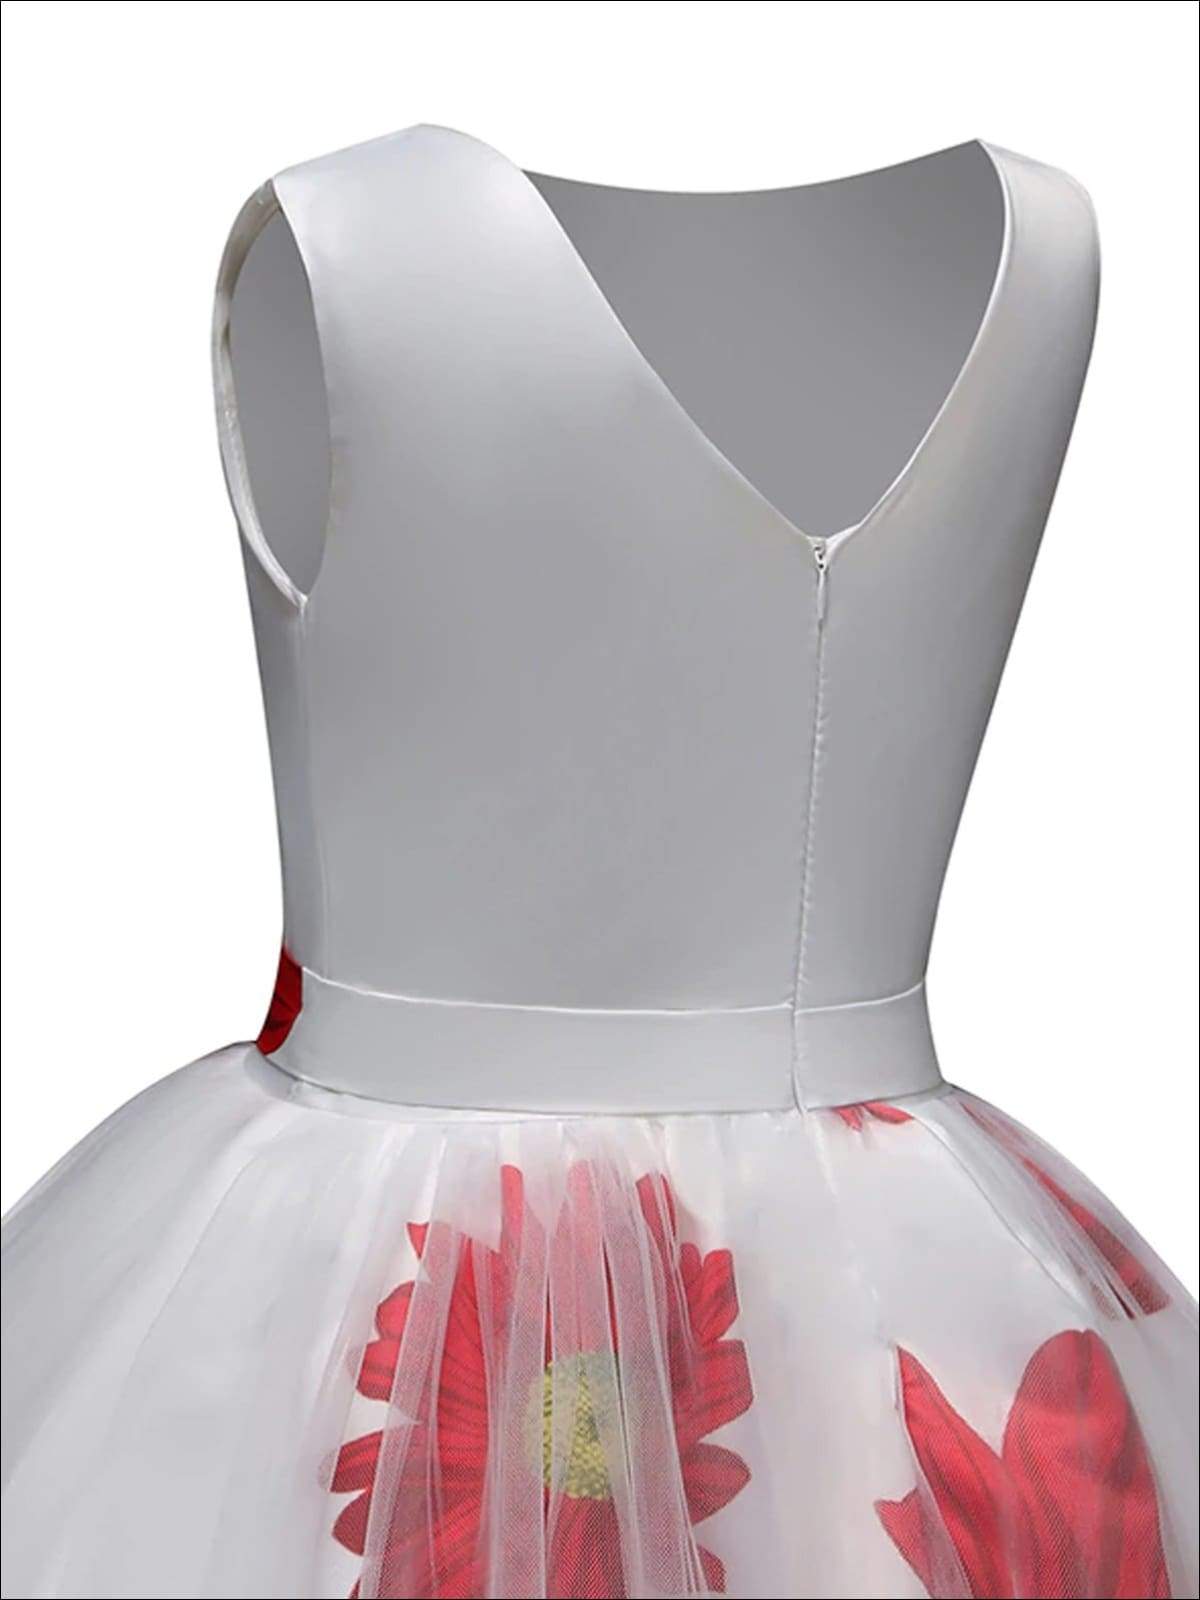 Girls Sleeveless Floral Print Floor Length Special Occasion Dress - Girls Spring Dressy Dress